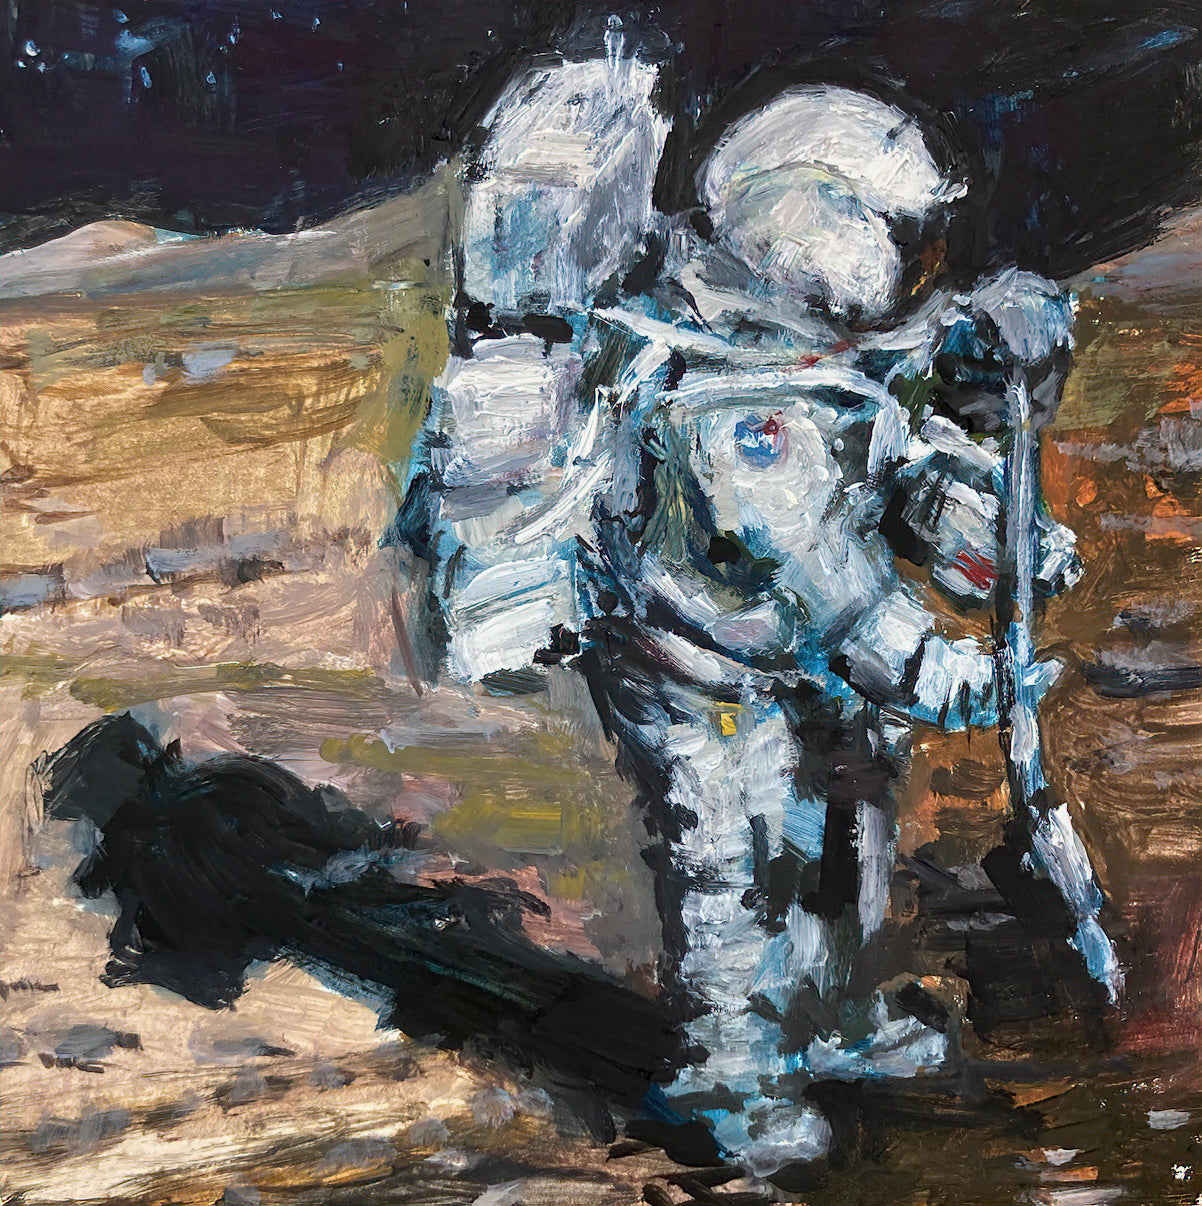 Oil painting of astronaut walking on lunar landscape titled 'Moon Walk' by E. E. Jacks